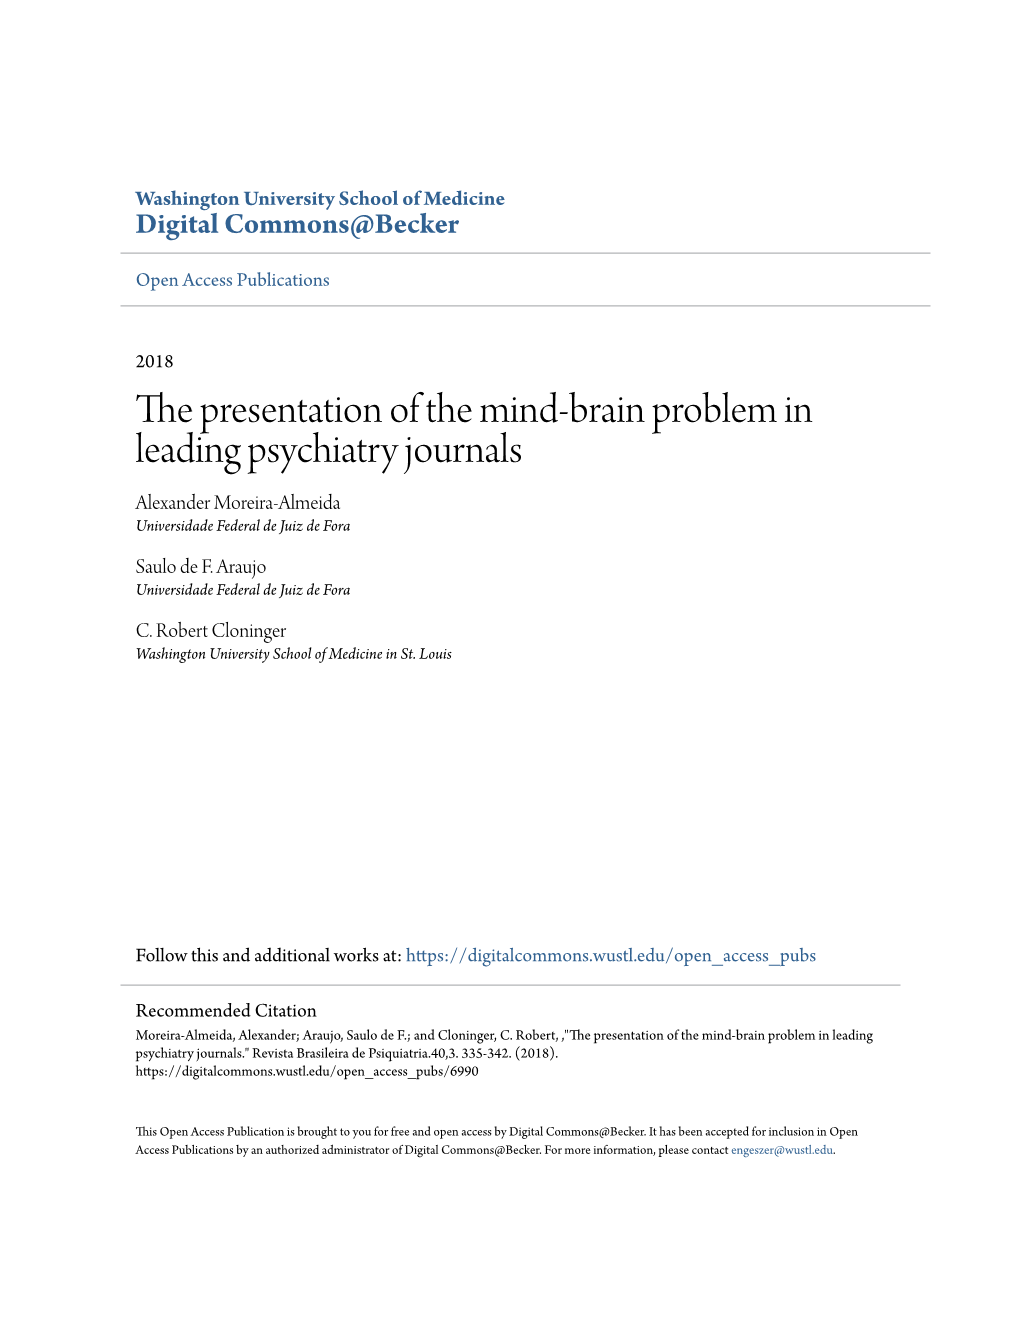 The Presentation of the Mind-Brain Problem in Leading Psychiatry Journals Alexander Moreira-Almeida Universidade Federal De Juiz De Fora